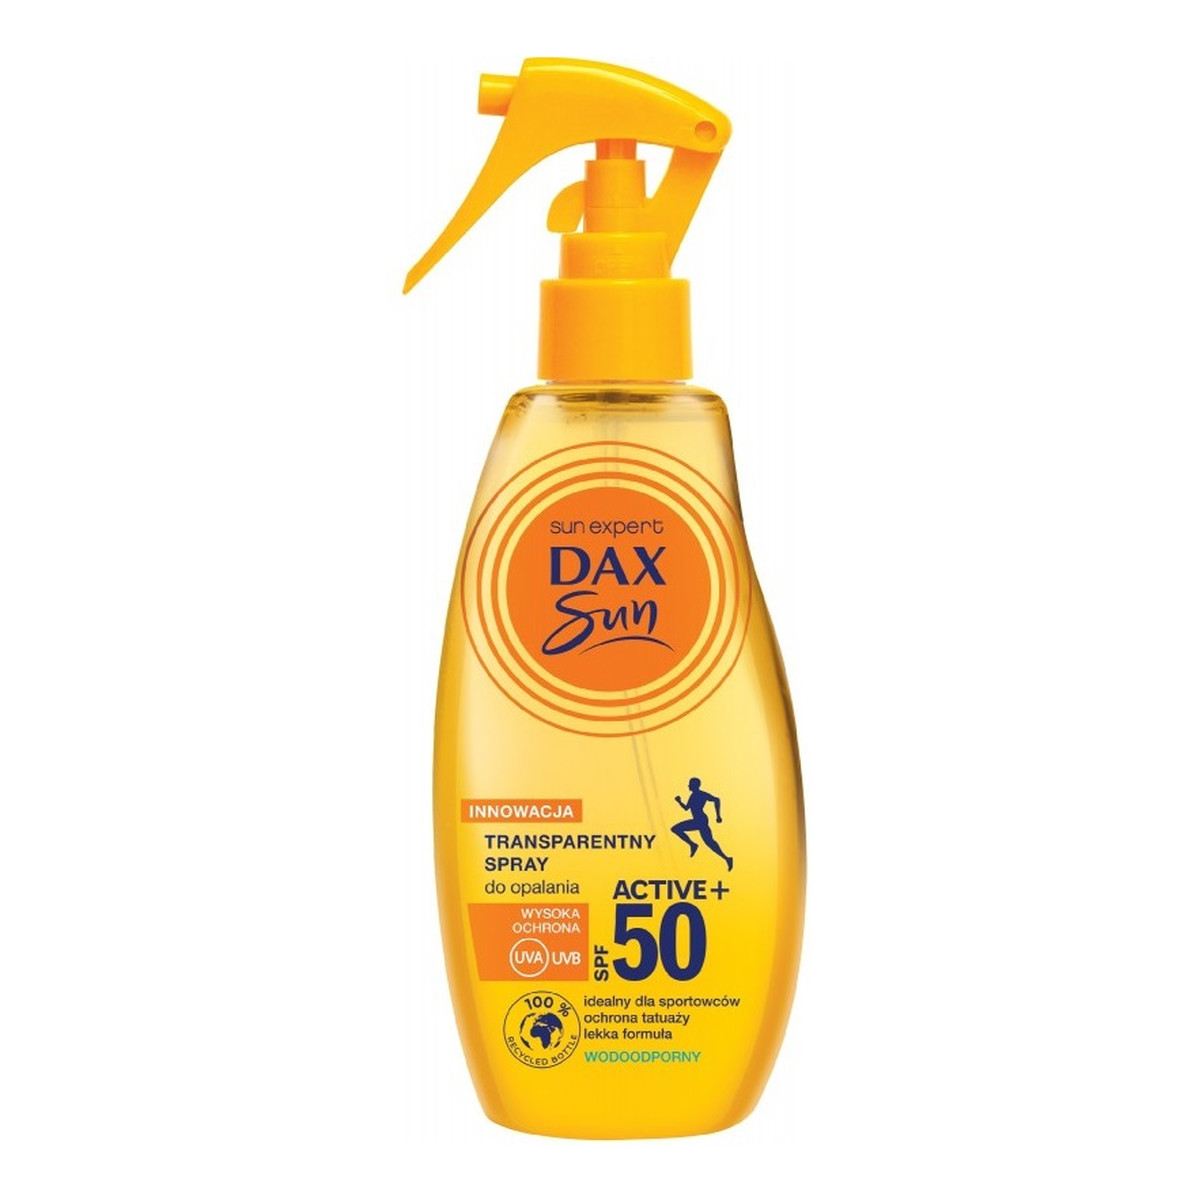 Dax Sun Transparentny Spray do opalania Active+ SPF 50 200ml